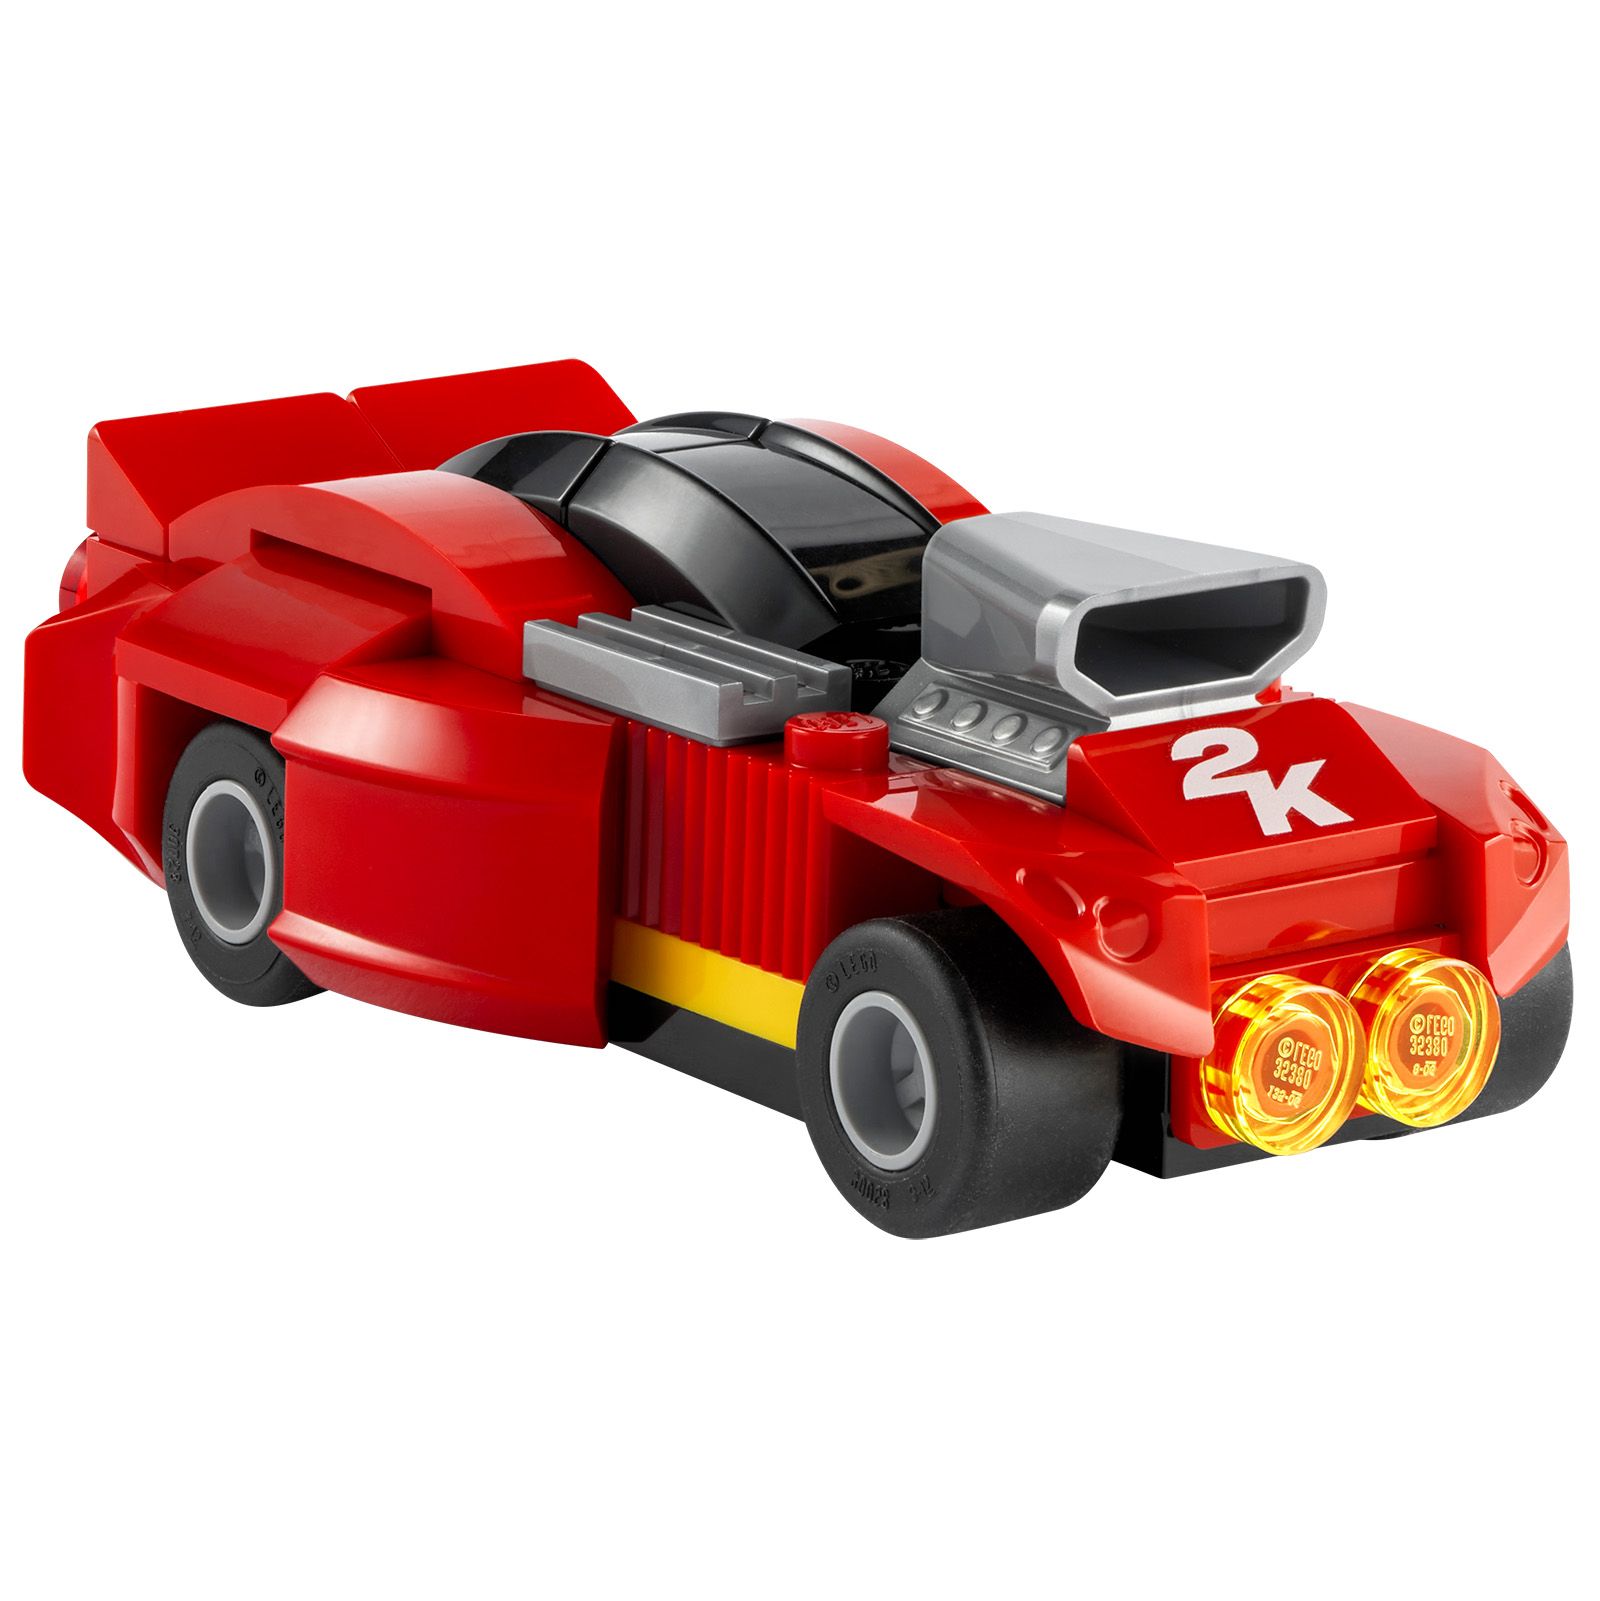 LEGO 2K Drive: ビデオ ゲームの特定の物理バージョンで提供される予告編と LEGO 製品